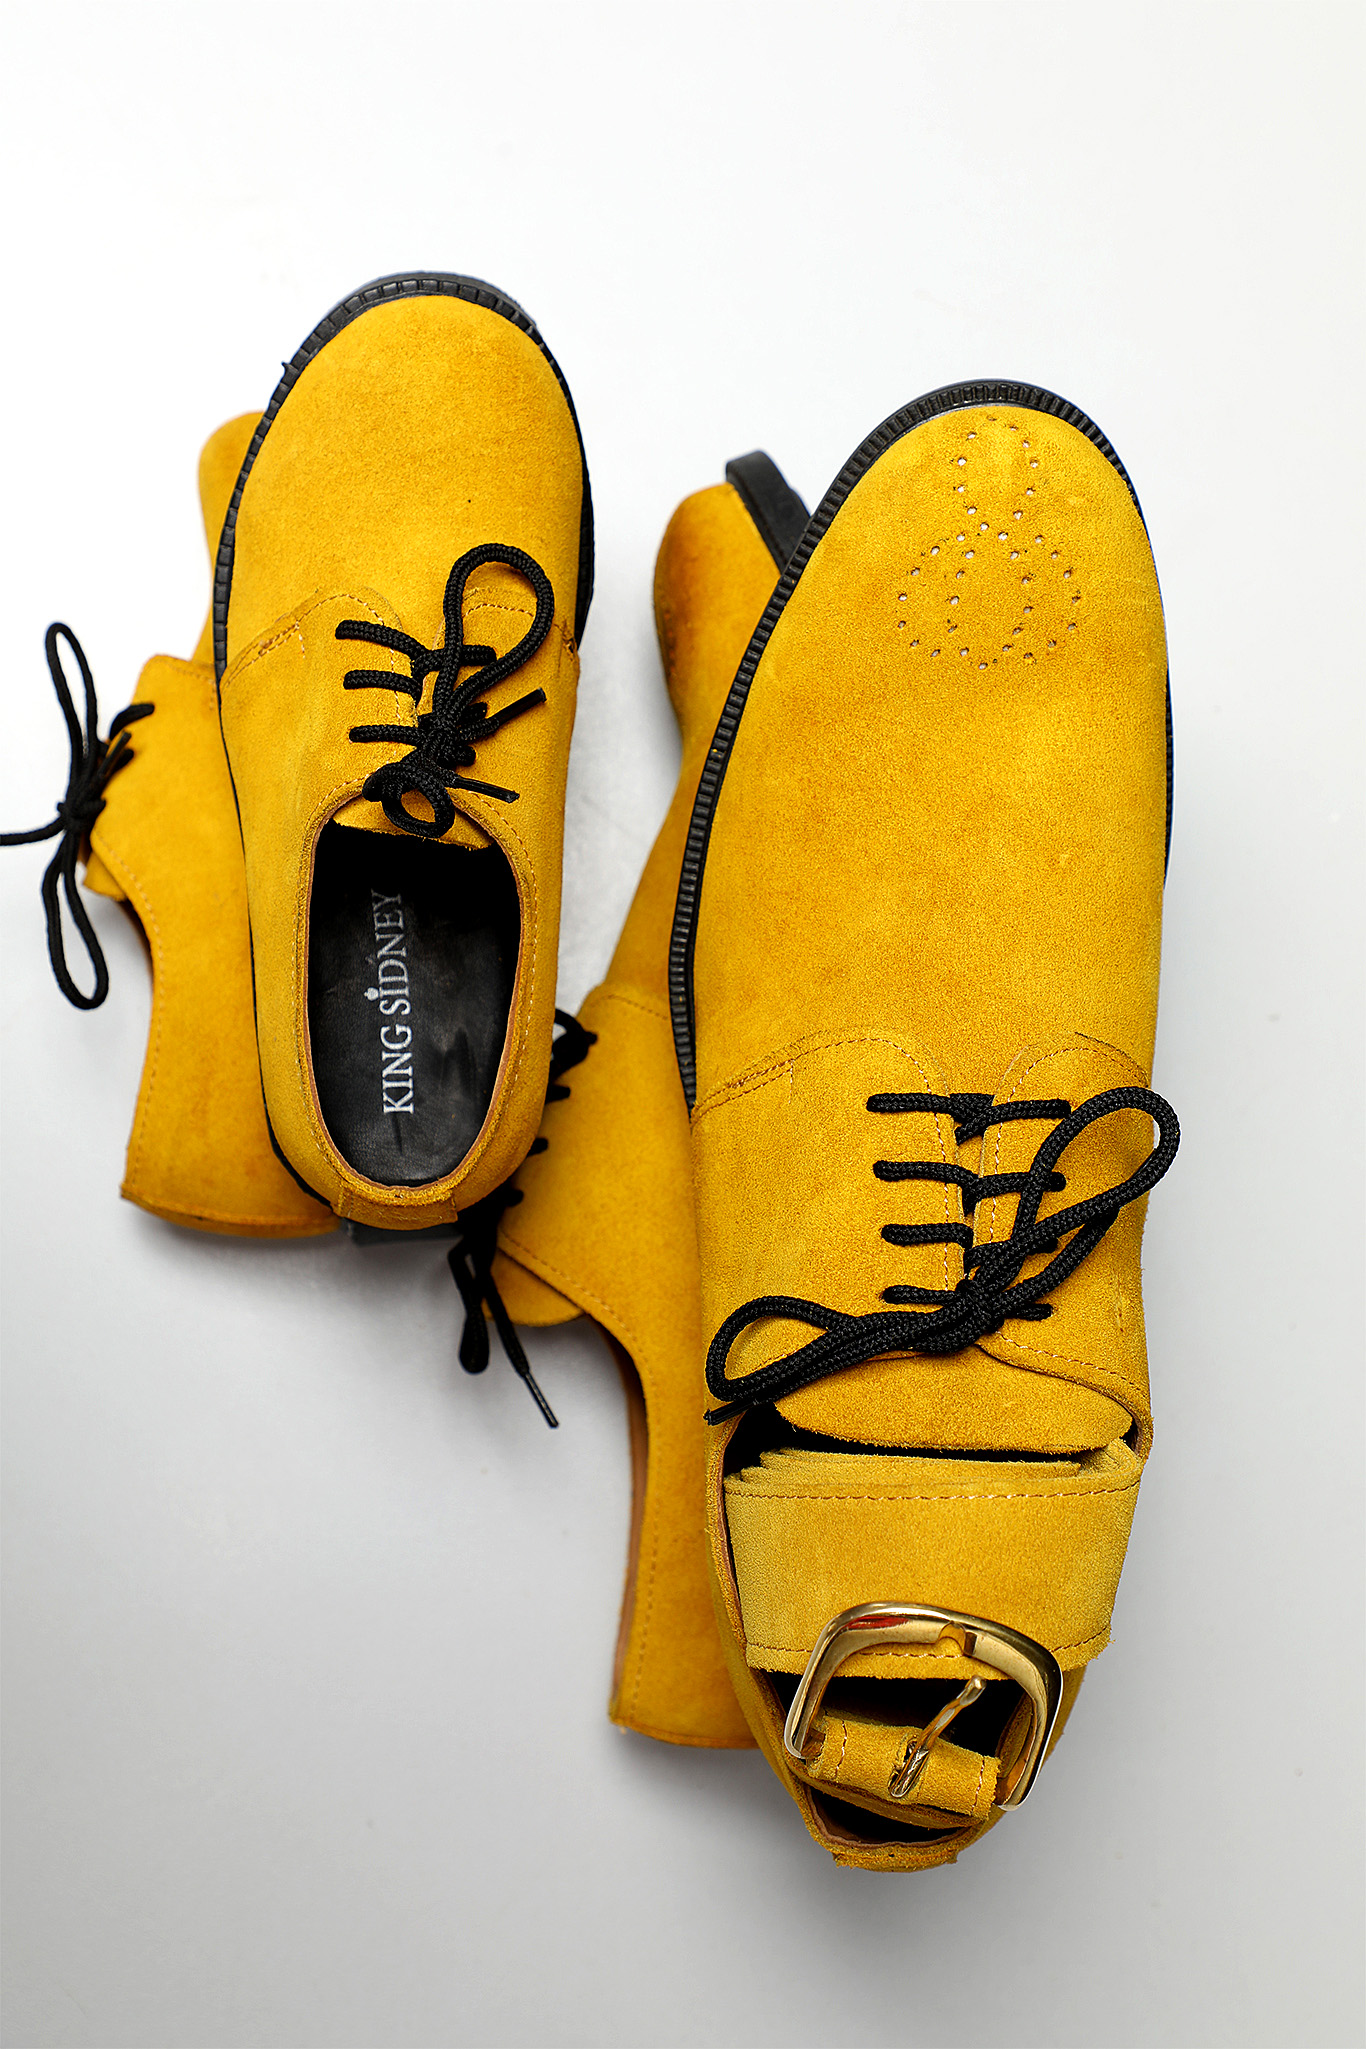 mustard yellow suede brogues shoes for men nairobi kenya